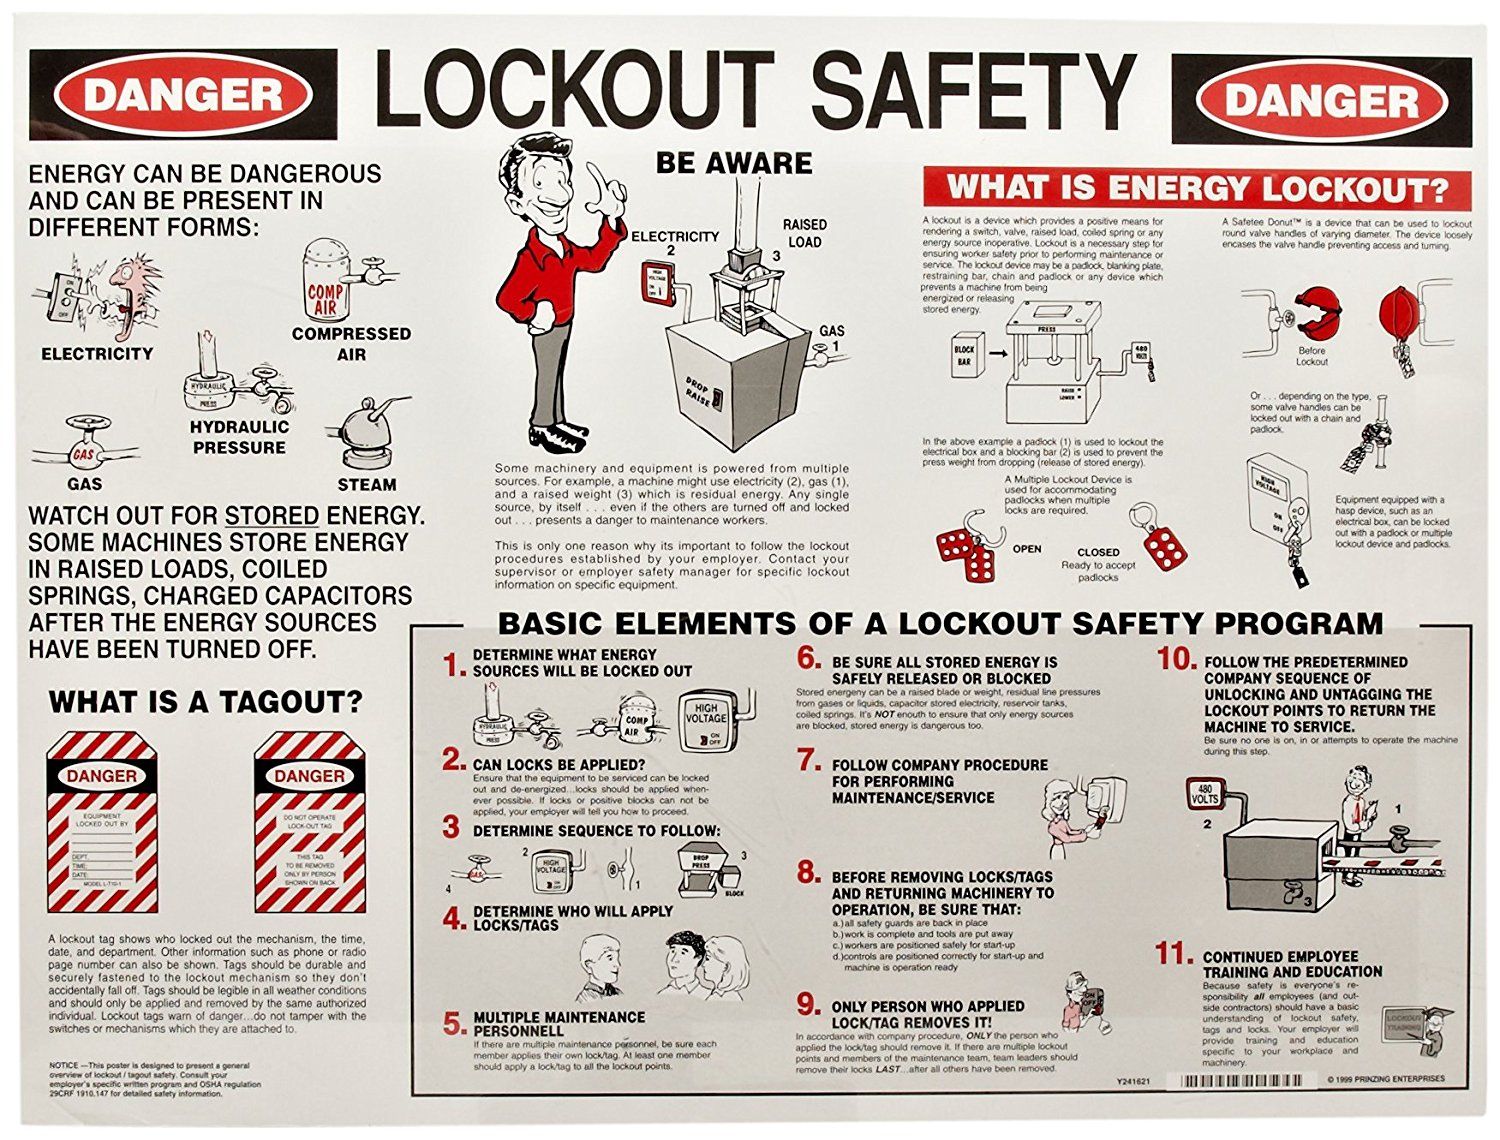 Lockout/Tagout LOTO Procedures for Control of Hazardous Energy